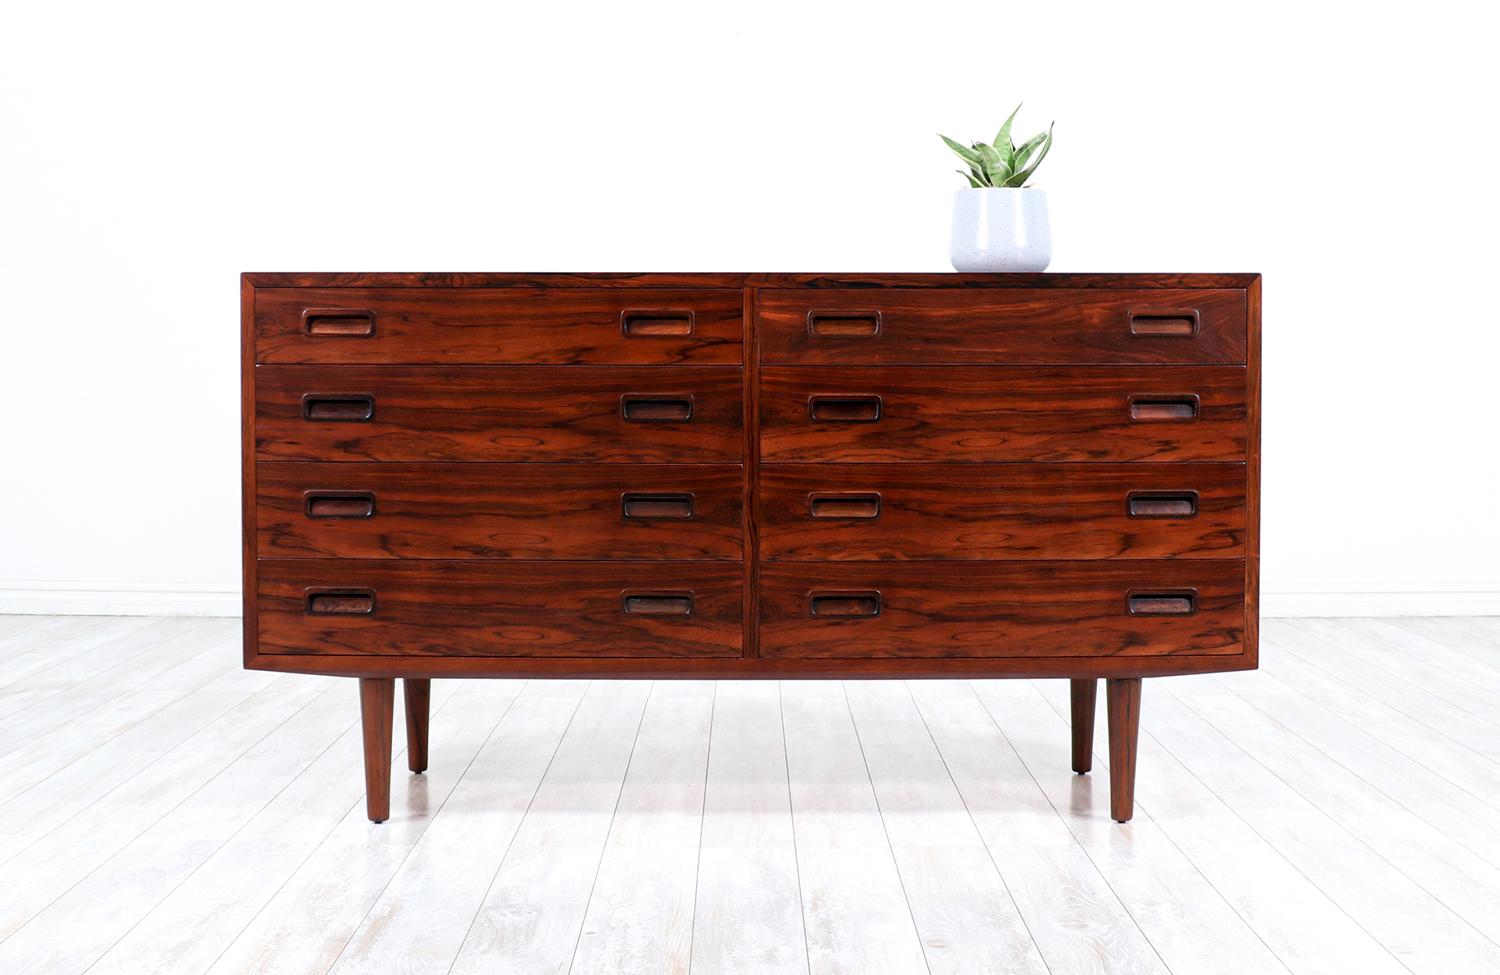 Danish modern rosewood dresser by Carlo Jensen for Hundevad & Co.